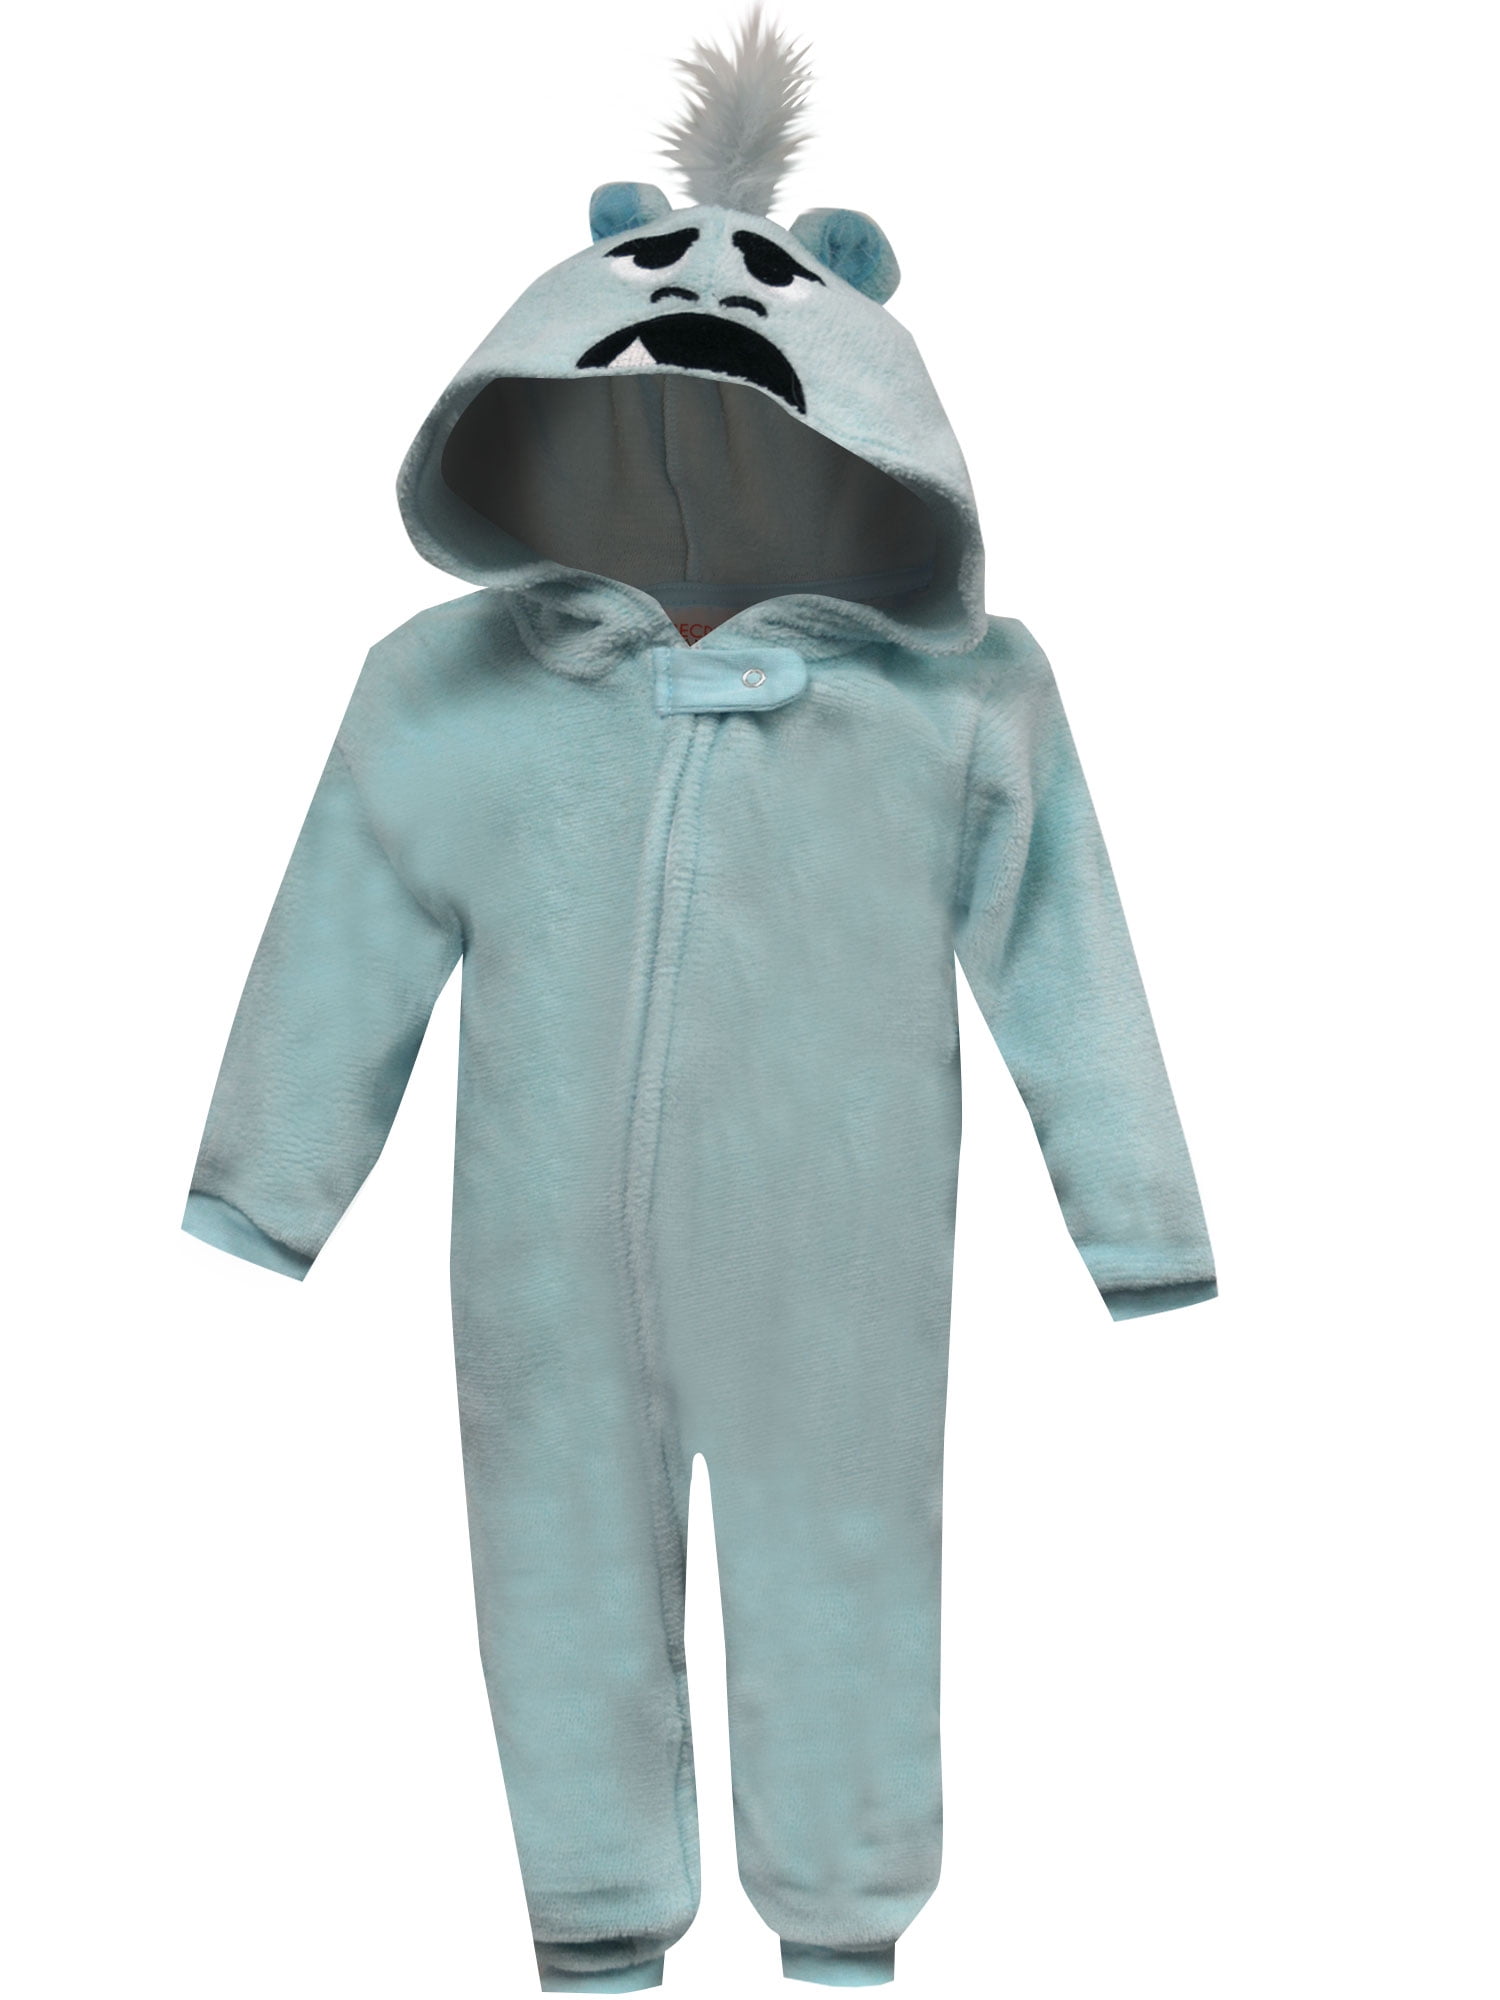 Boy's Toddler Yeti Costume 